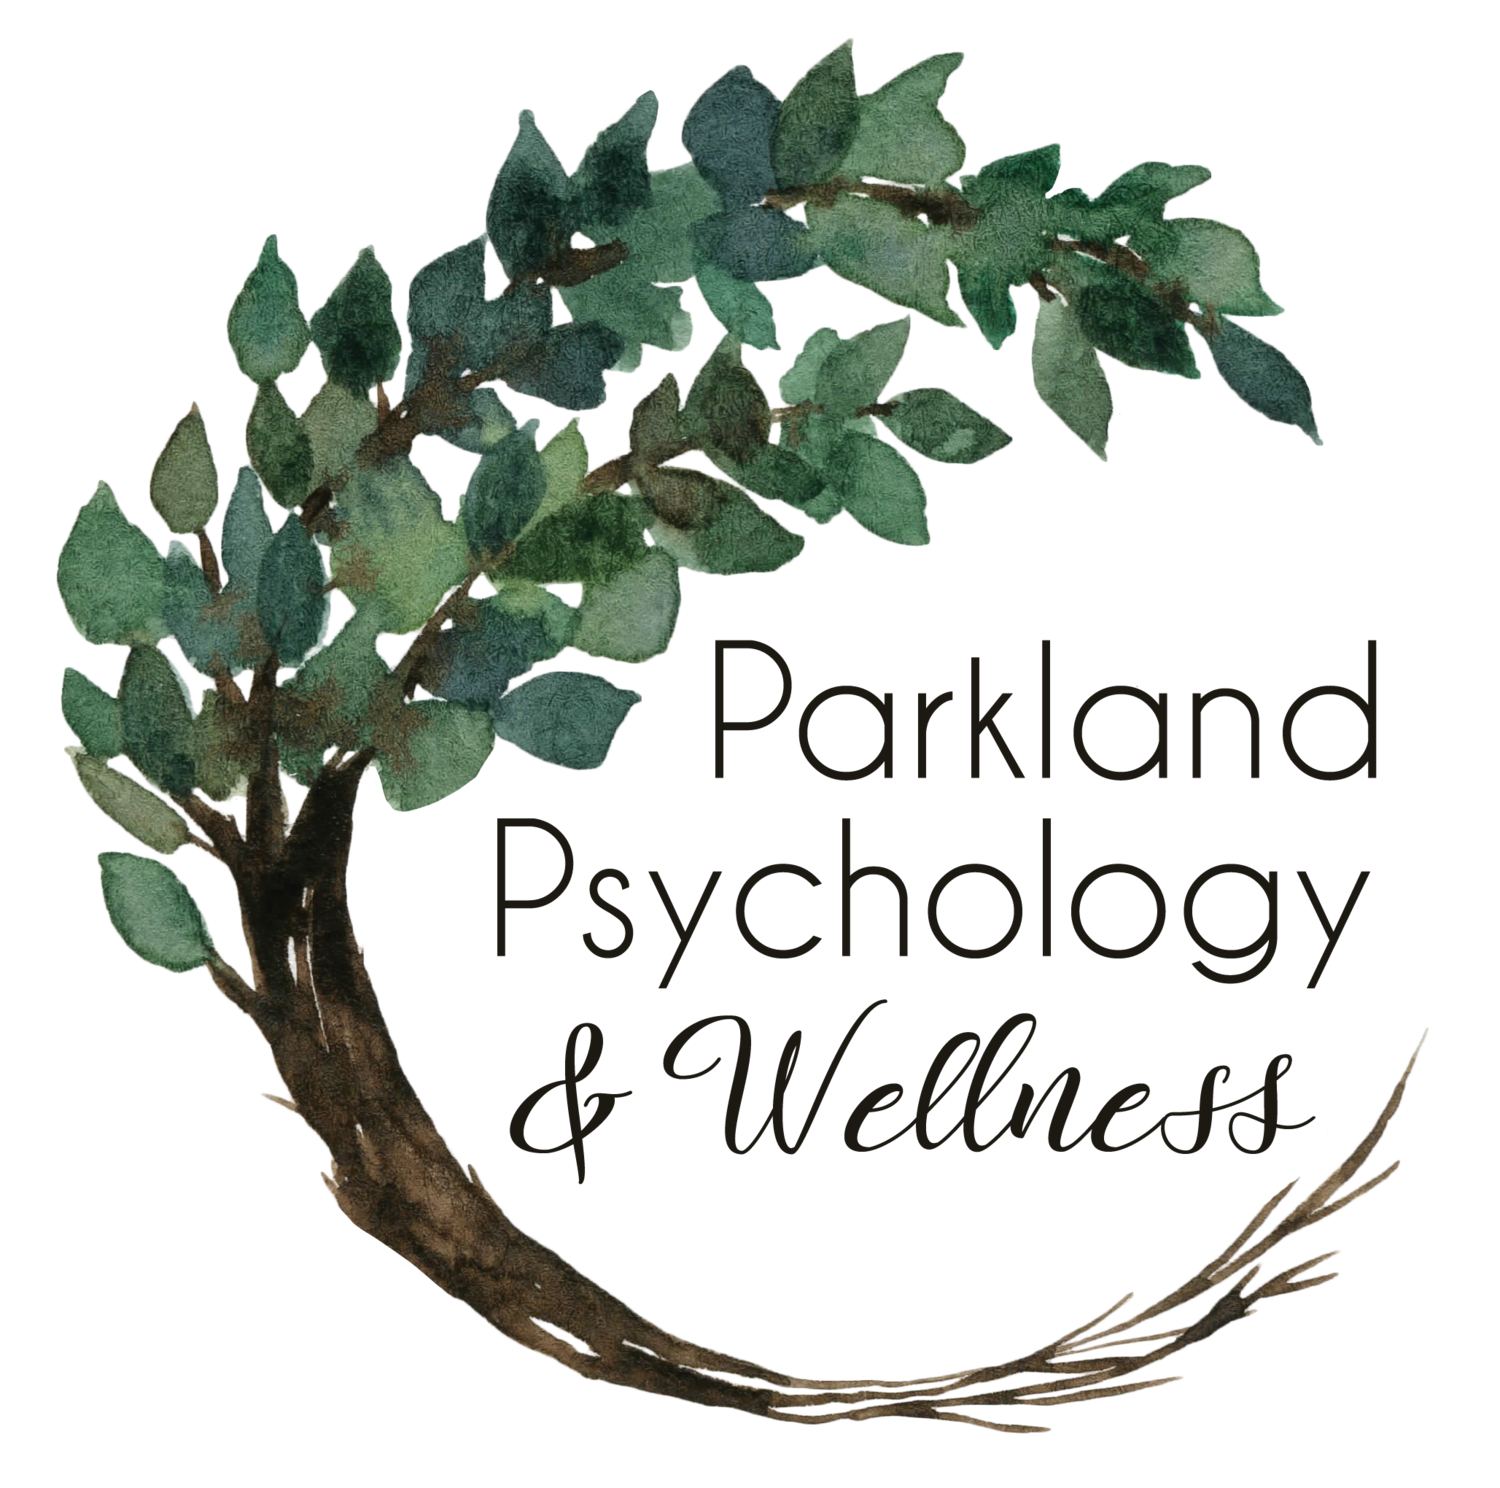 Parkland Psychology and Wellness